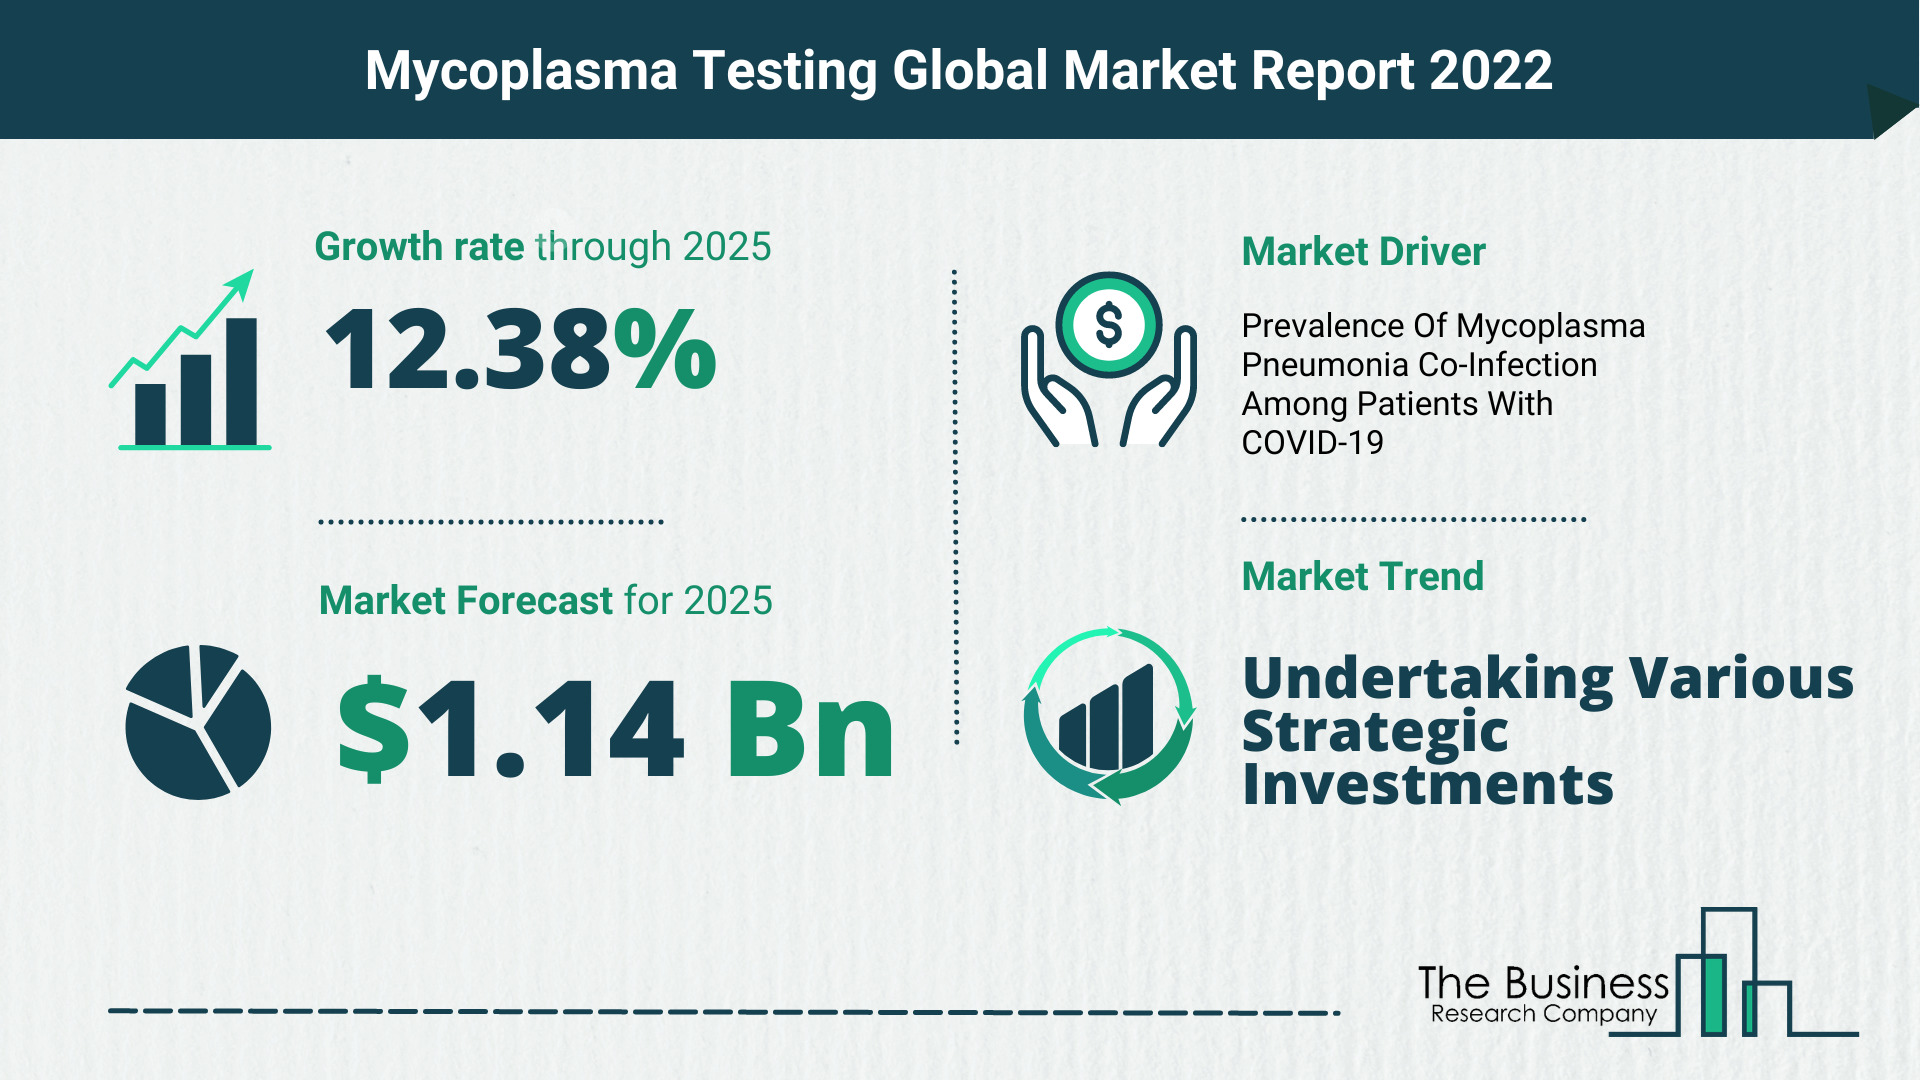 Global Mycoplasma Testing Market Report